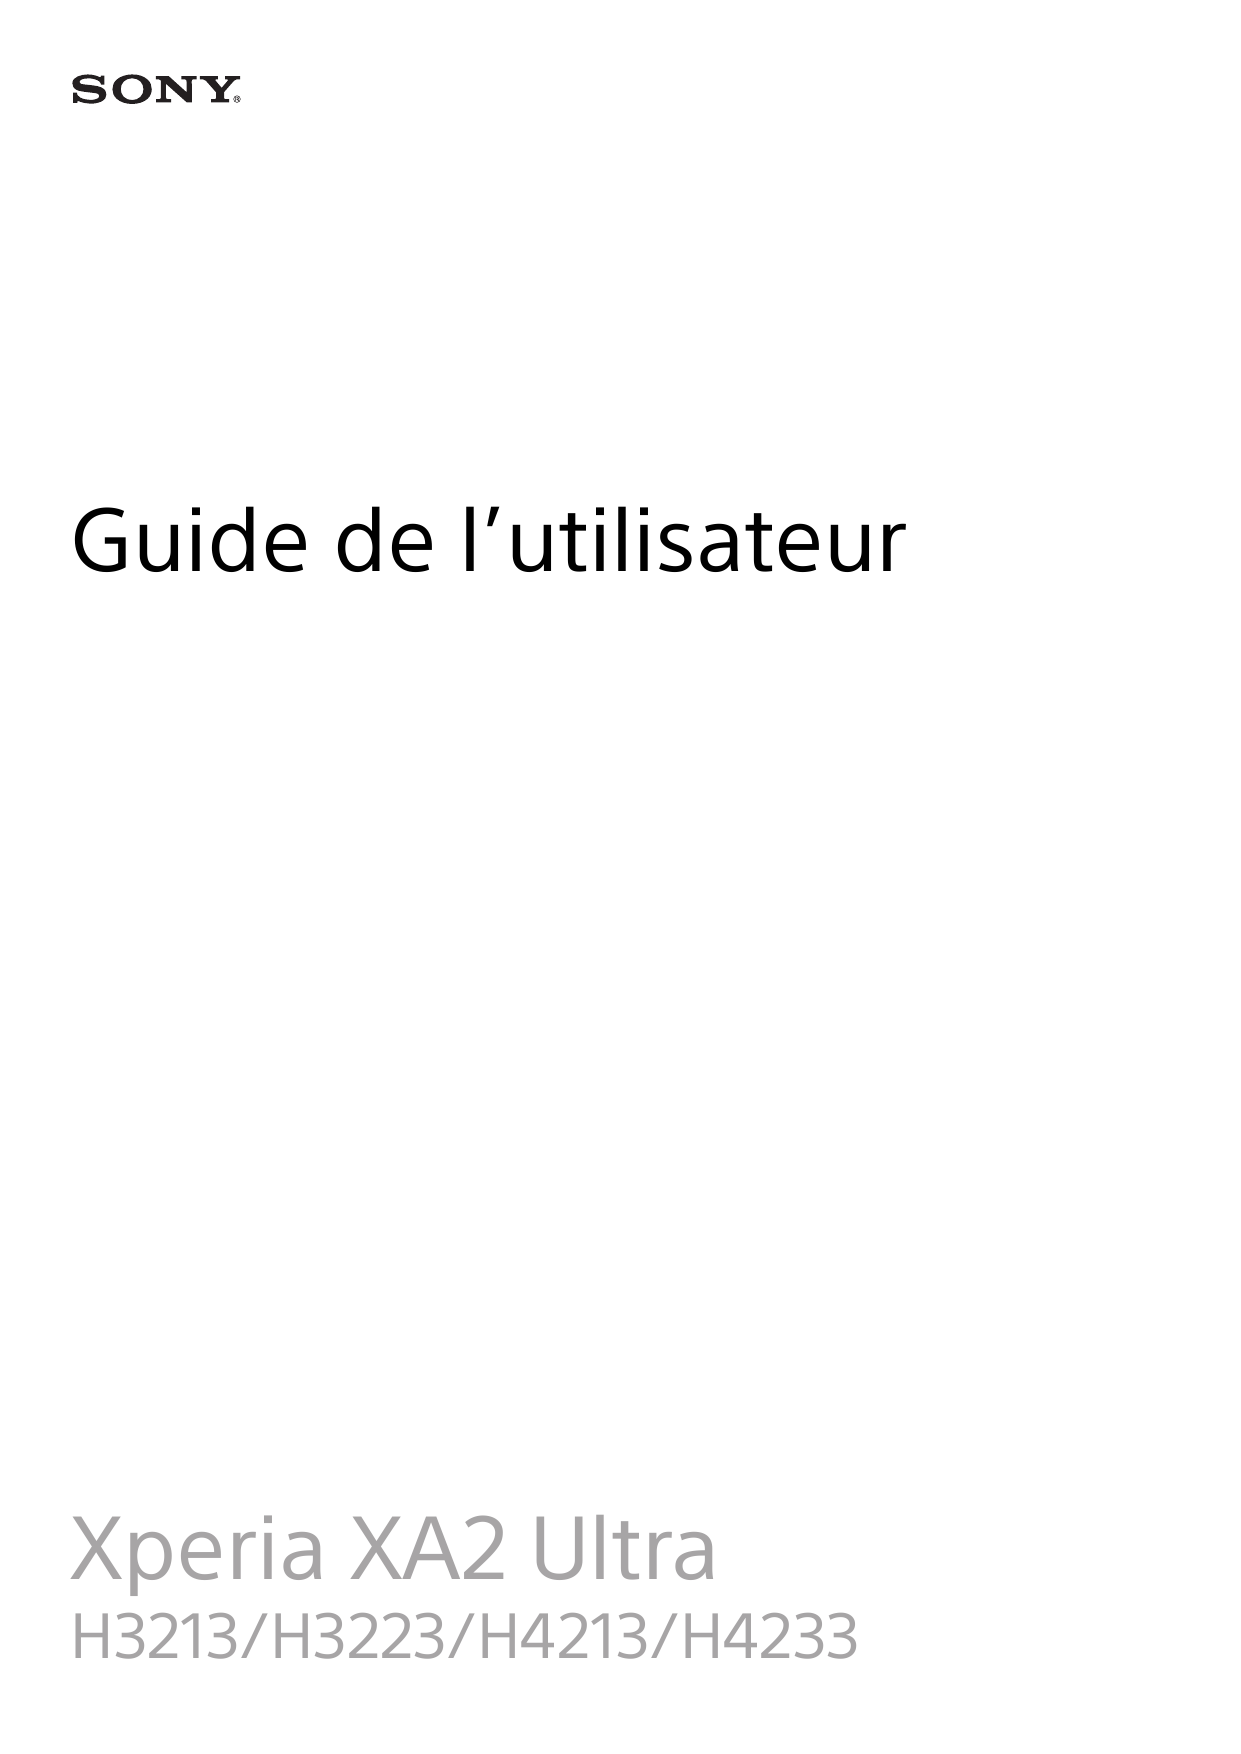 Guide de l’utilisateurXperia XA2 UltraH3213/H3223/H4213/H4233